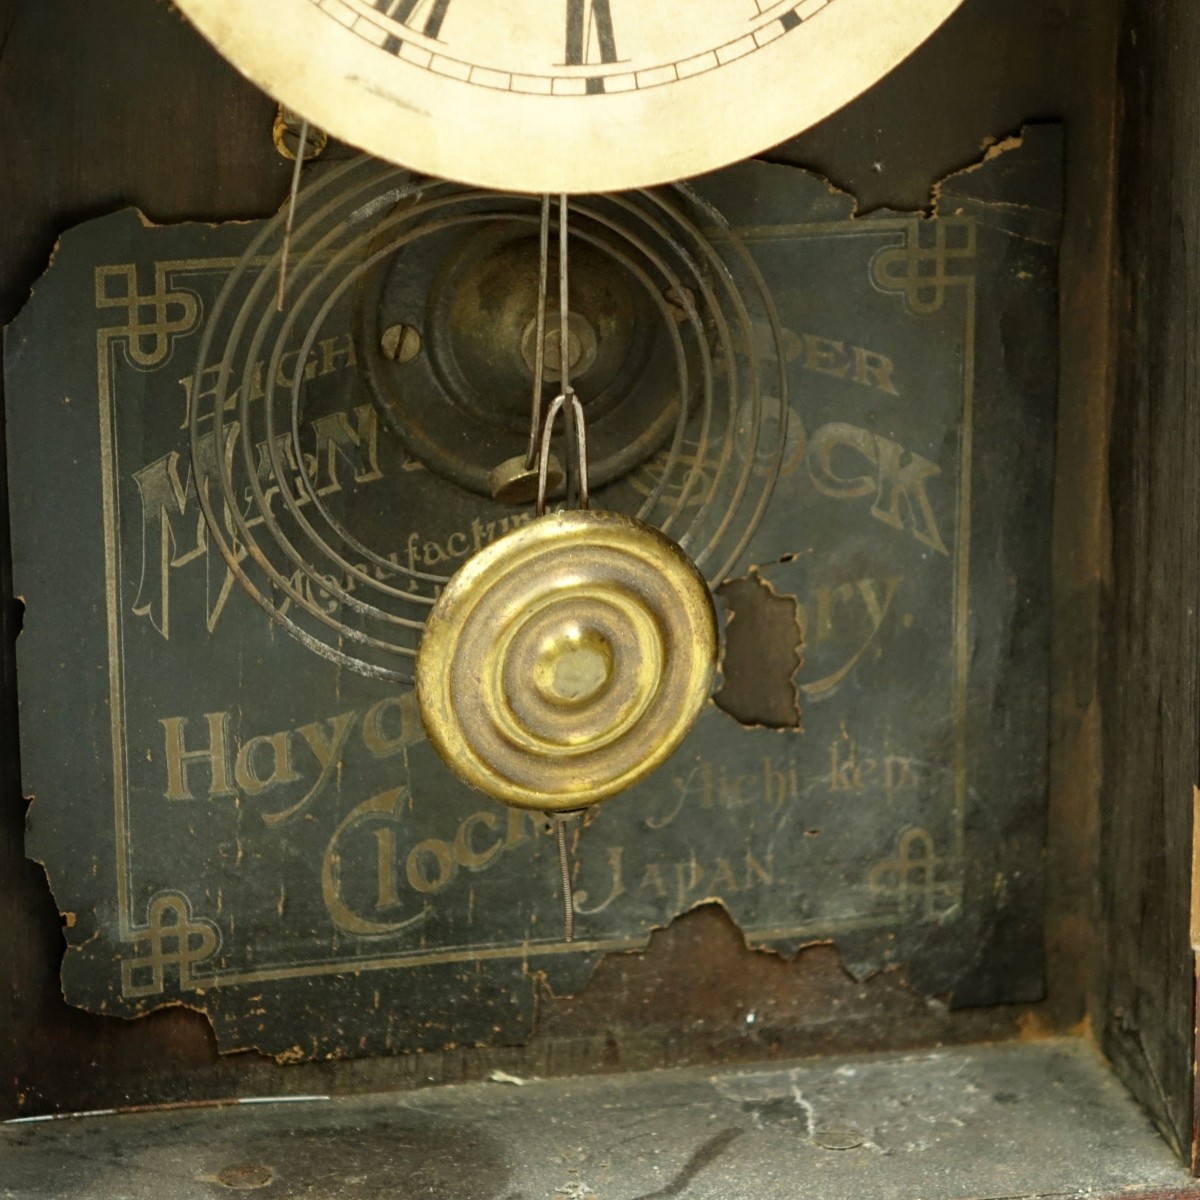 Vintage Japanese Hayashi Wooden Mantle Clock